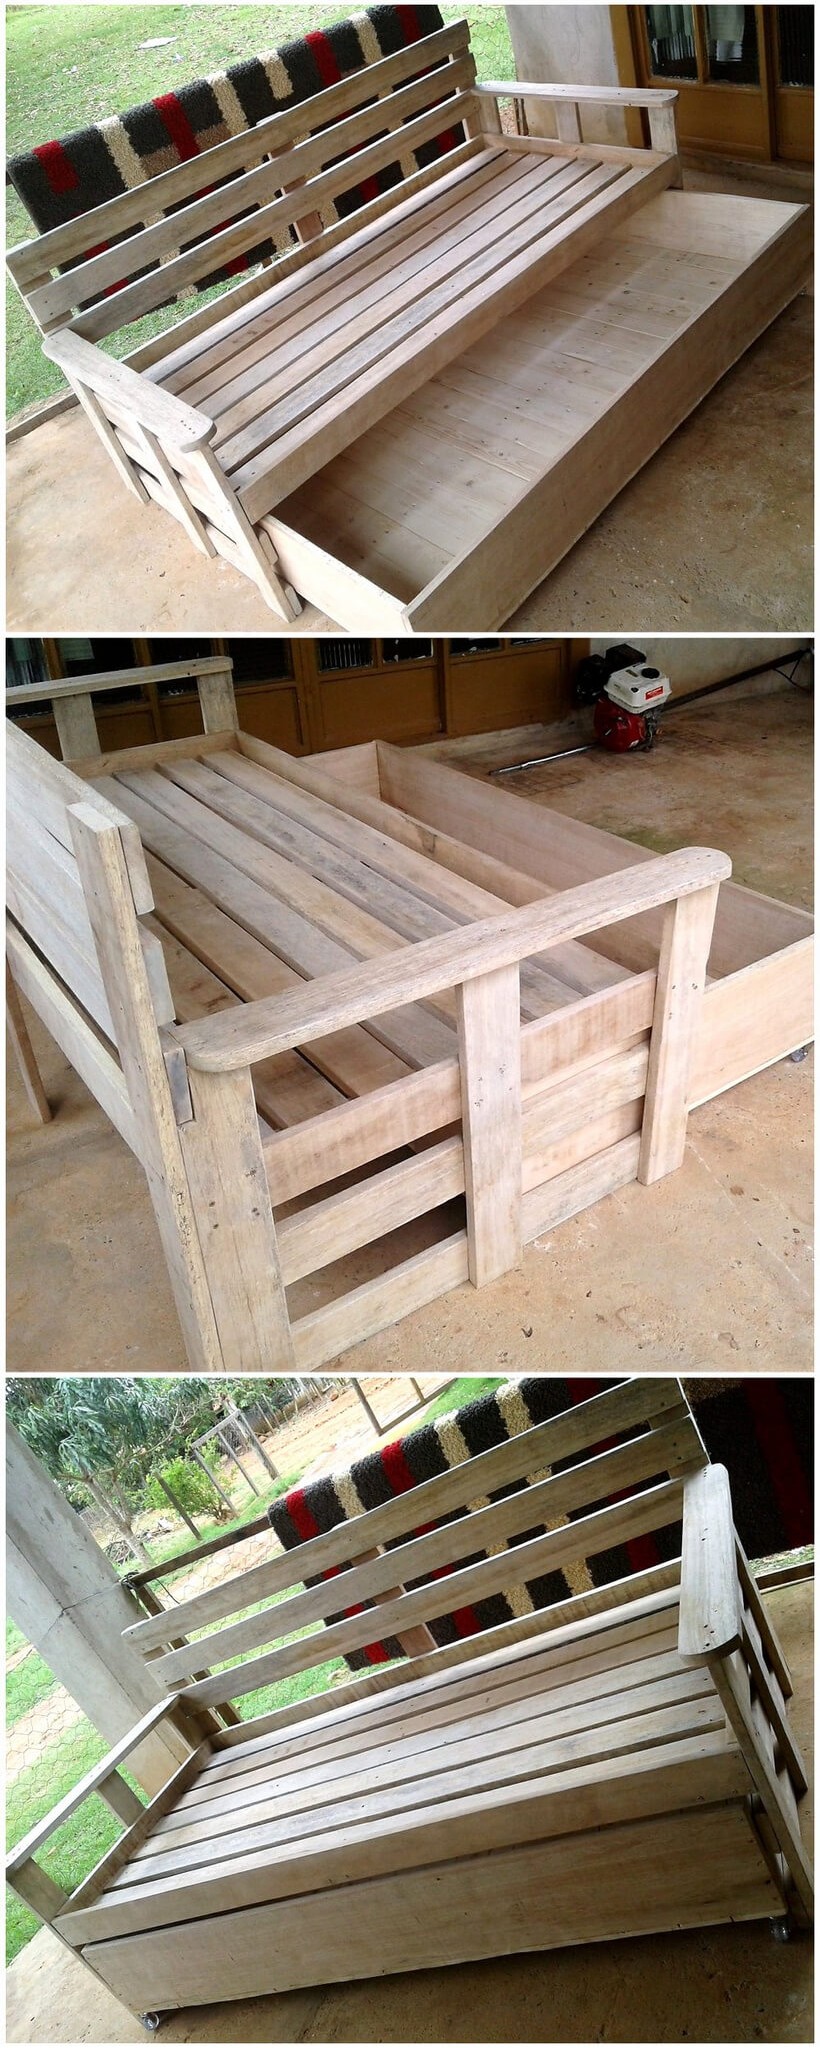 wooden-pallets-sofa-bed-410x1024%402x.jpg